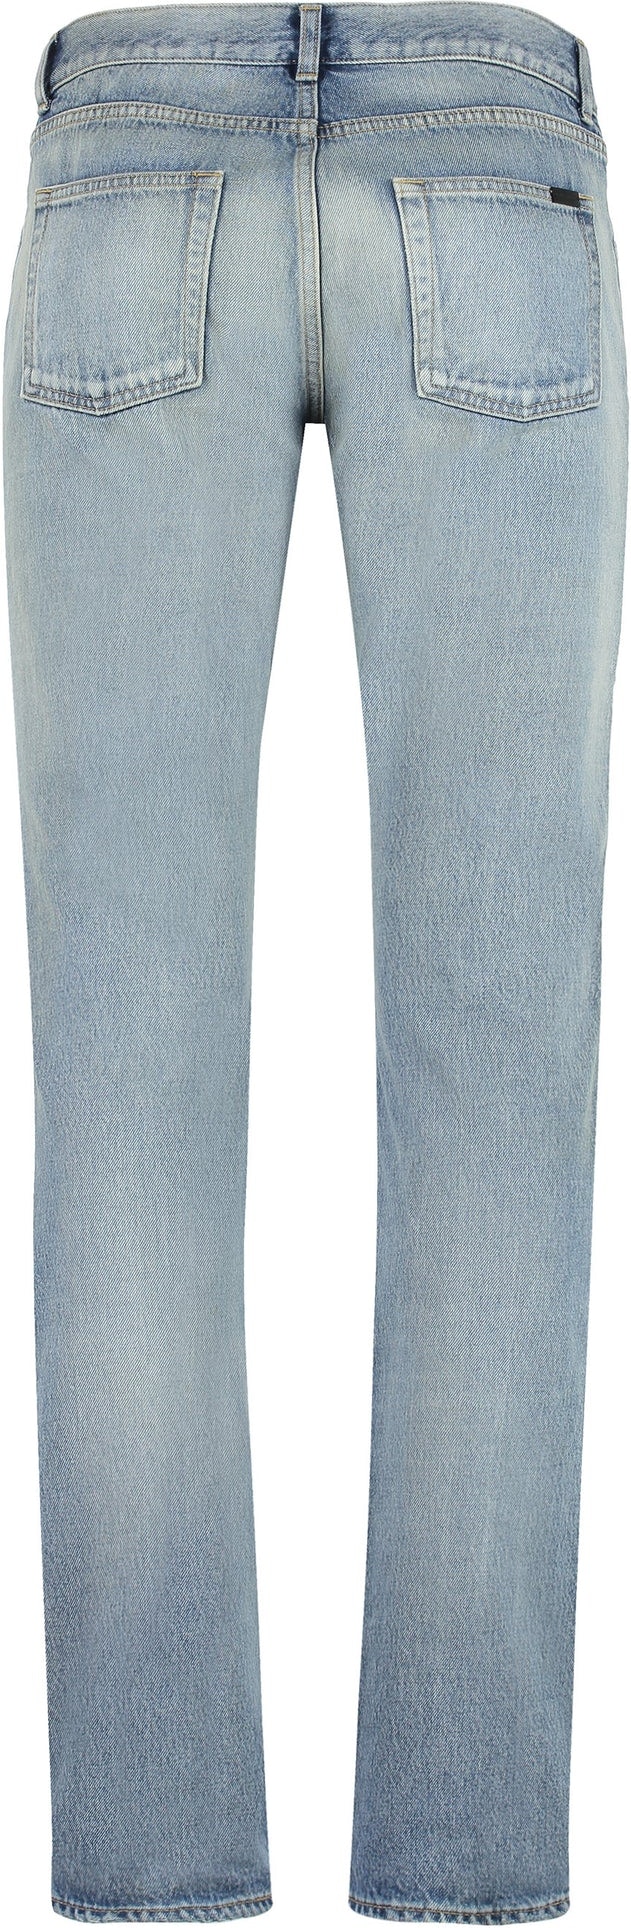 Slim-fit jeans in light fall blue denim, Saint Laurent